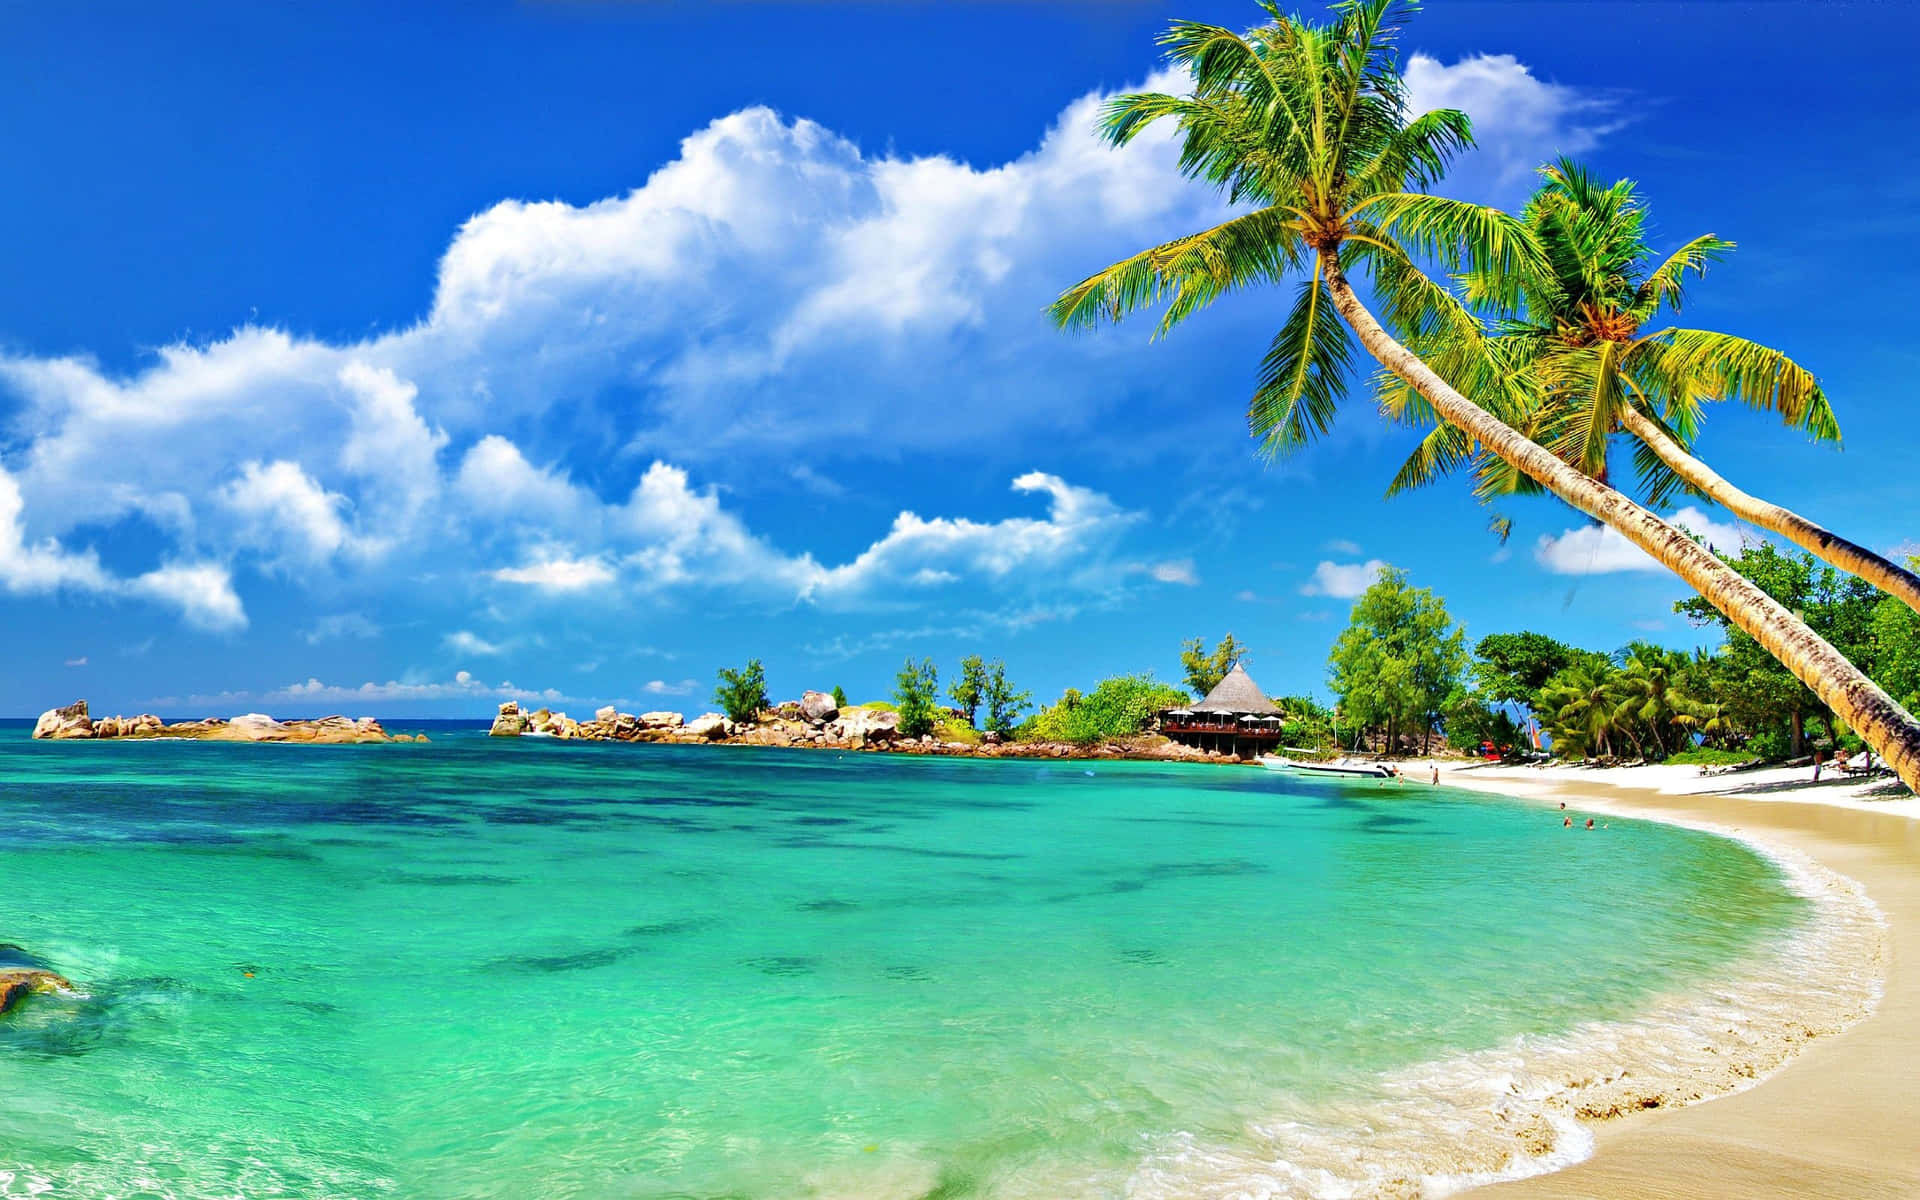 Enjoy the beauty of a tranquil Tropical Beach Scene Wallpaper